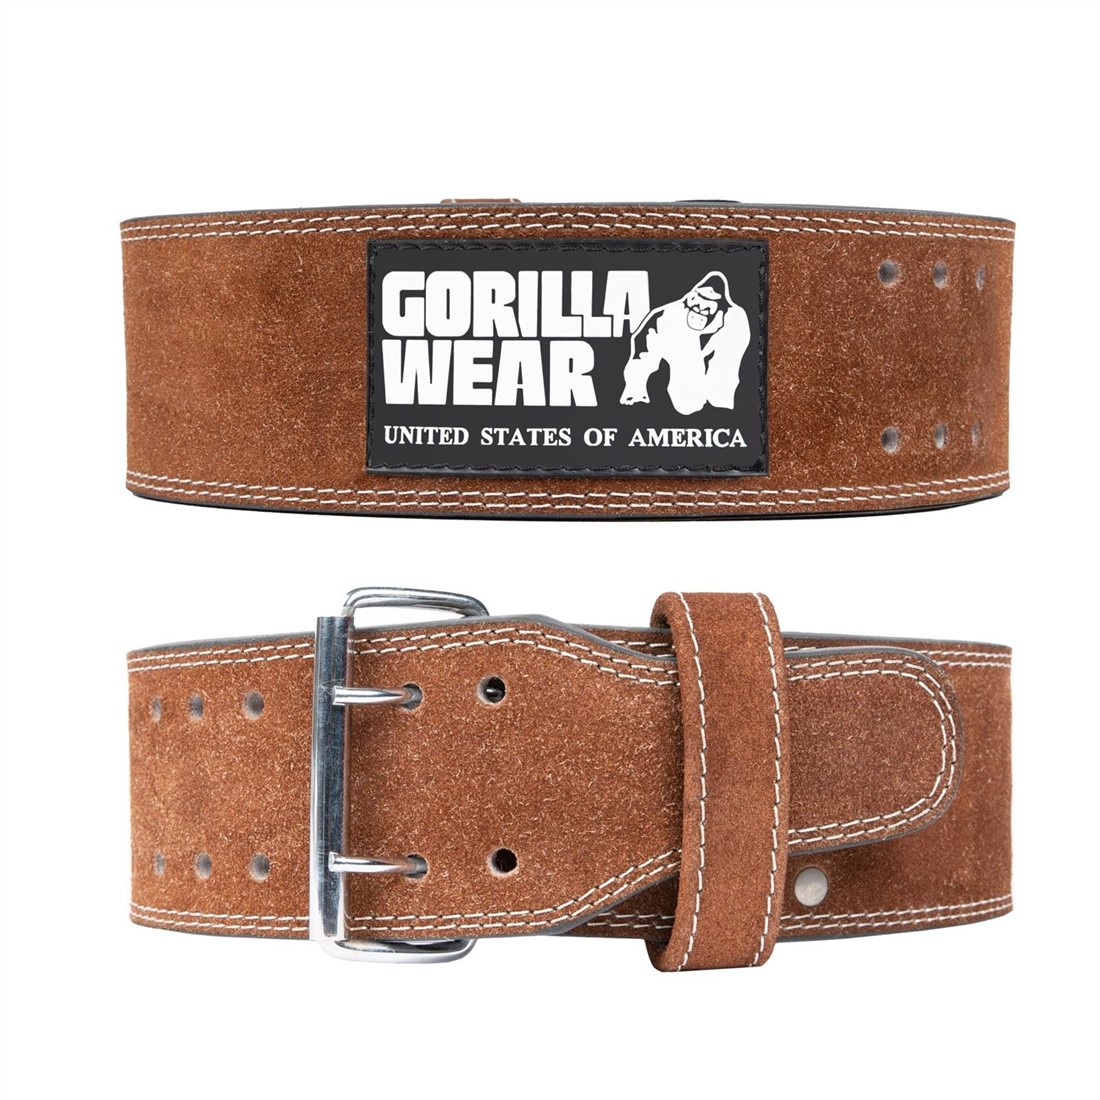 Gorilla Wear 4 Inch Leather Lifting Belt - Brown Gorilla Wear